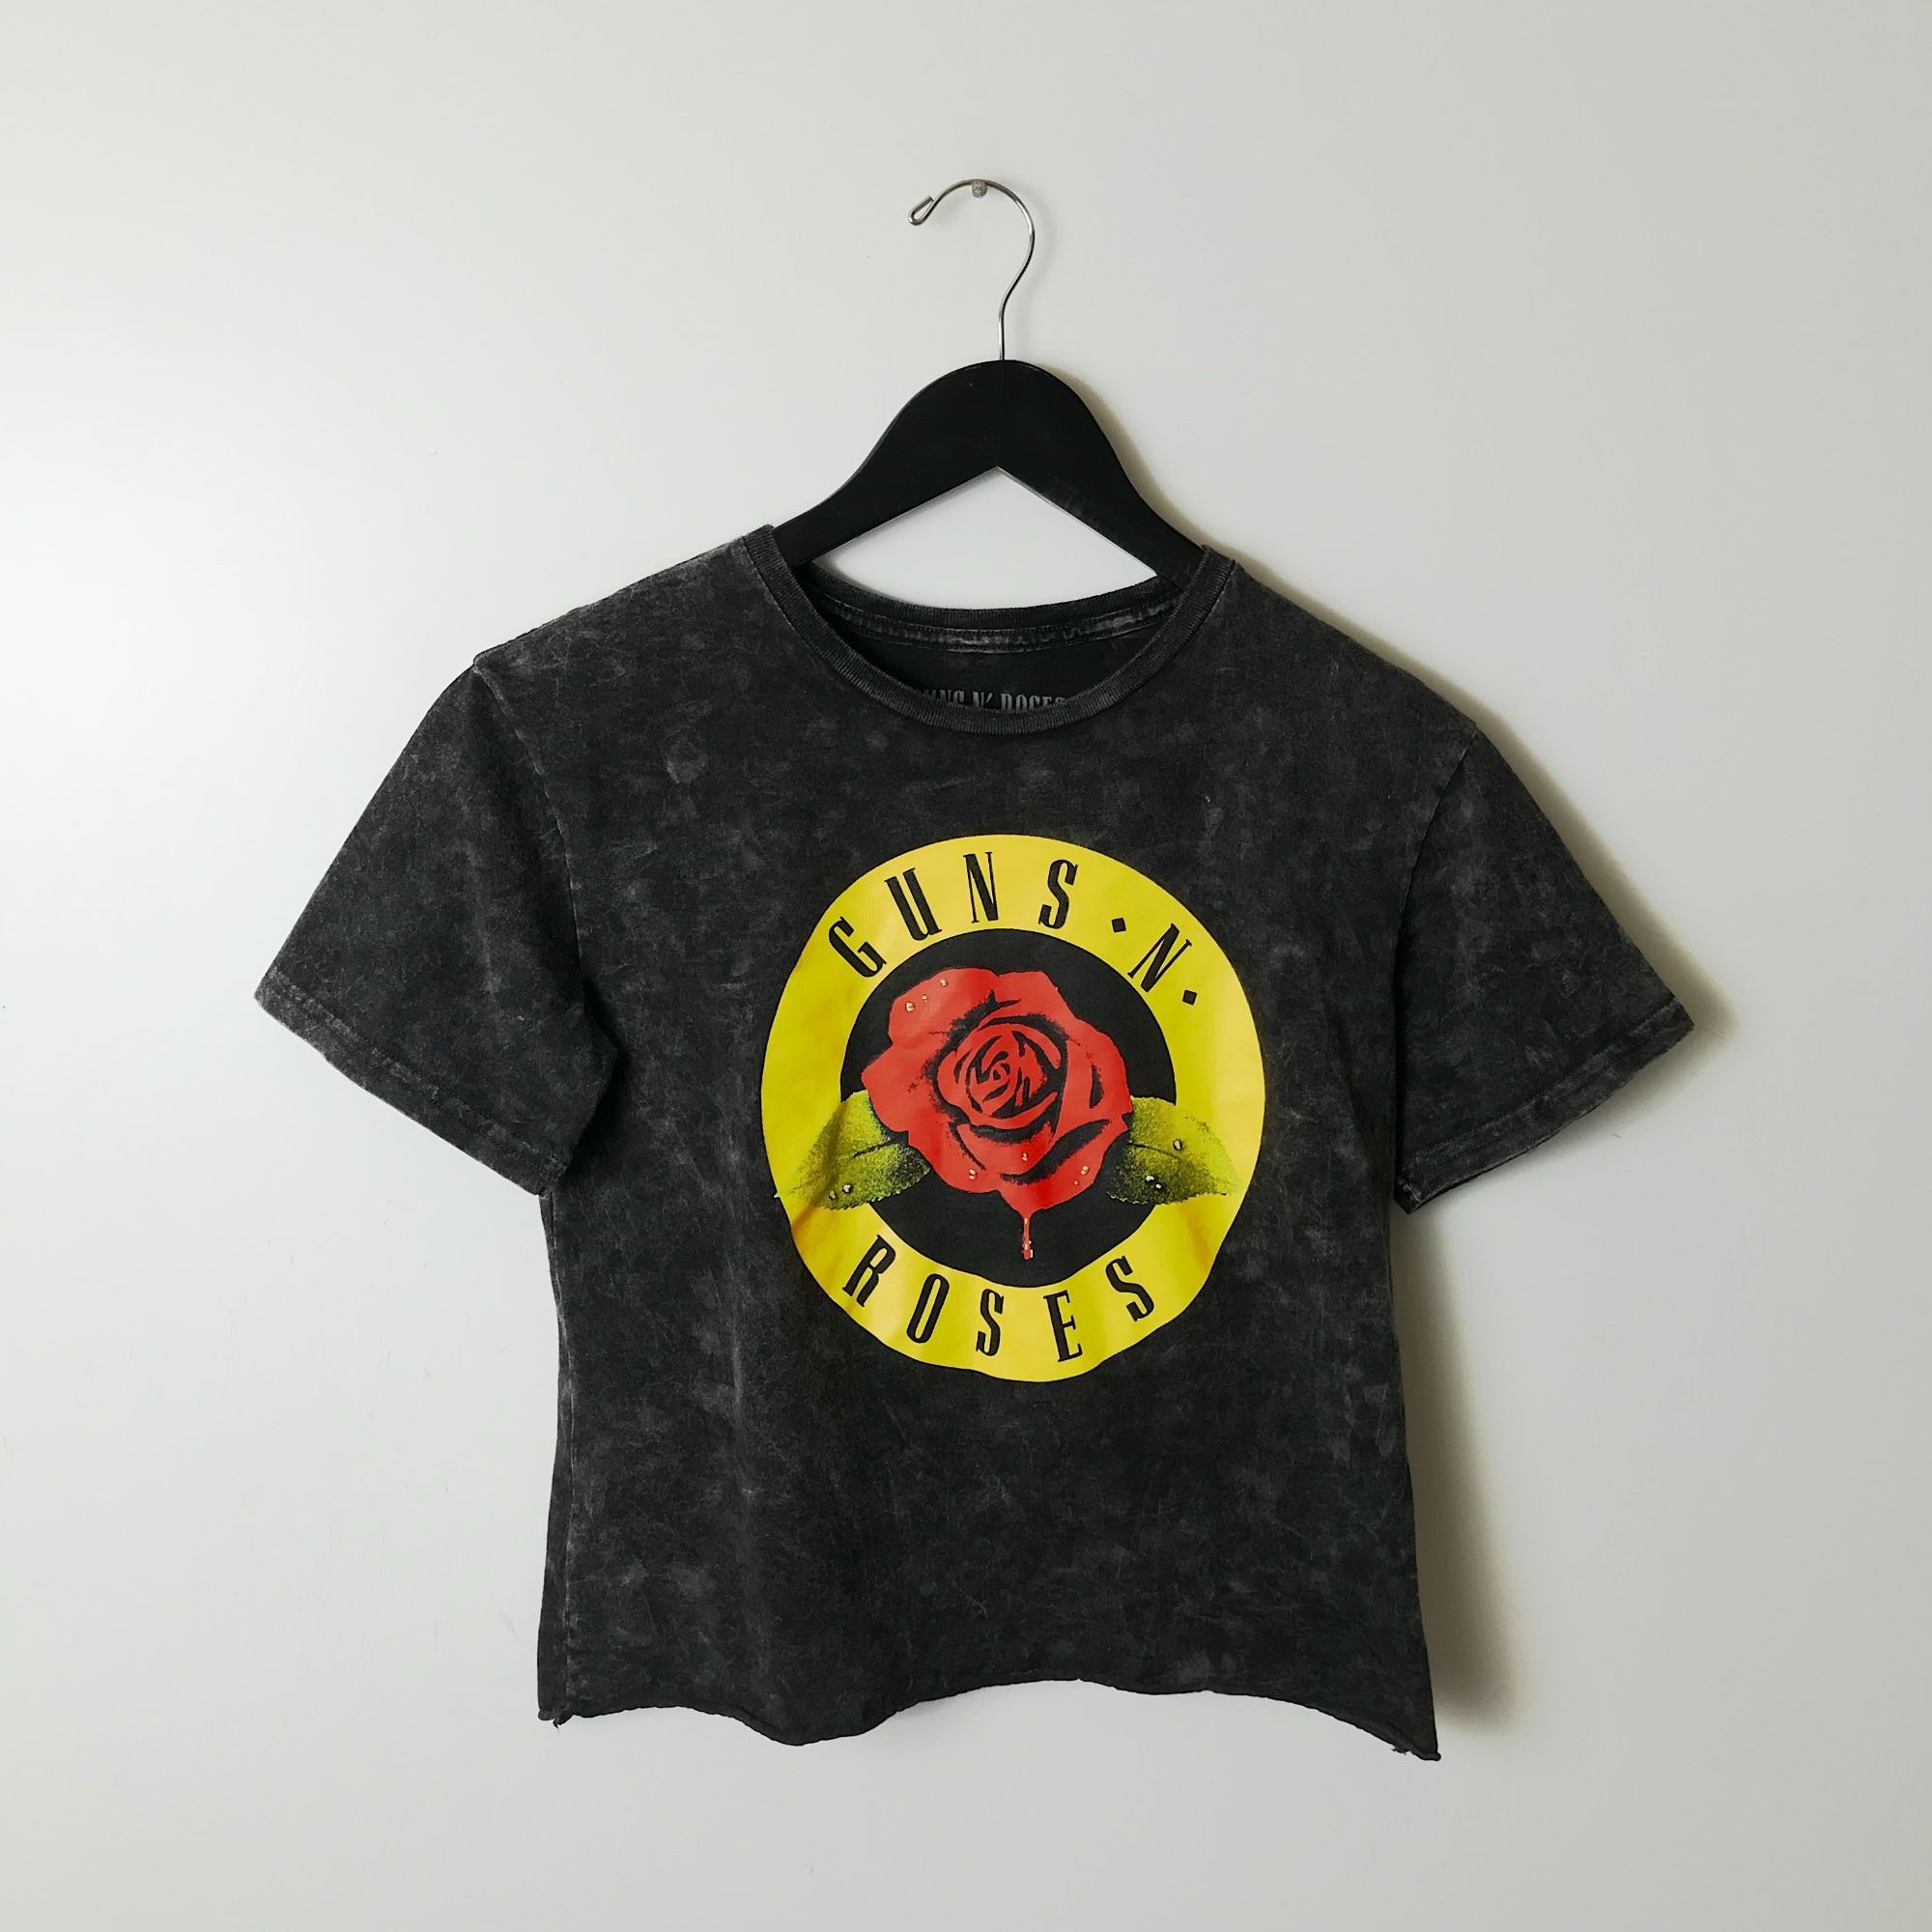 Urban Outfitters Guns N' Roses T Shirt Womens Black Medium Flower Raw Hem M Size M / US 6-8 / IT 42-44 - 8 Thumbnail